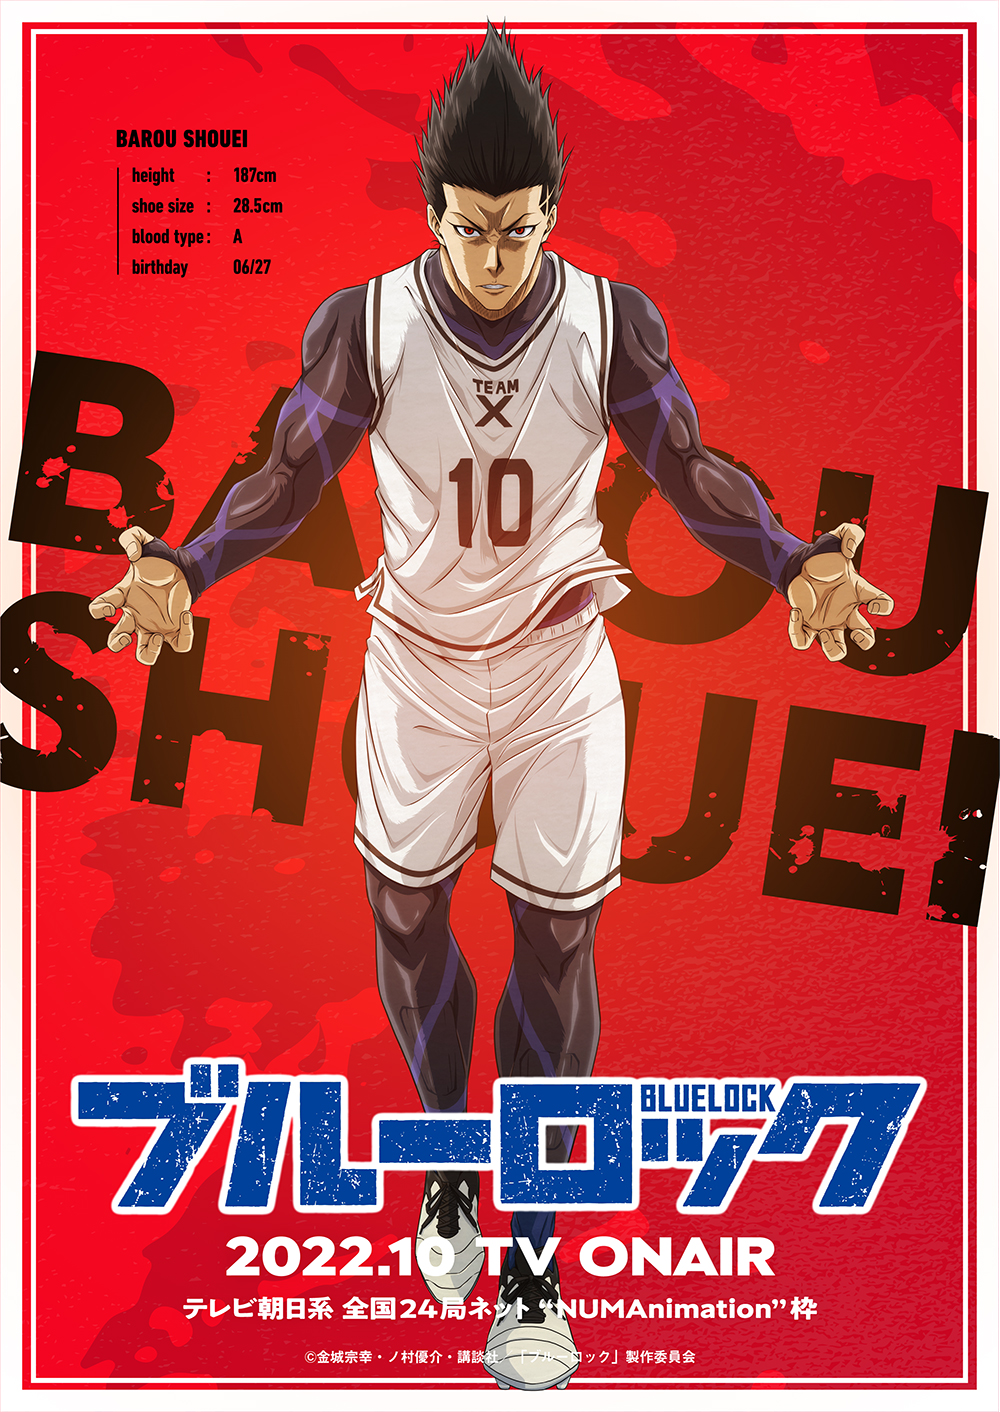 BLUELOCK anime Barou Shouei character visual